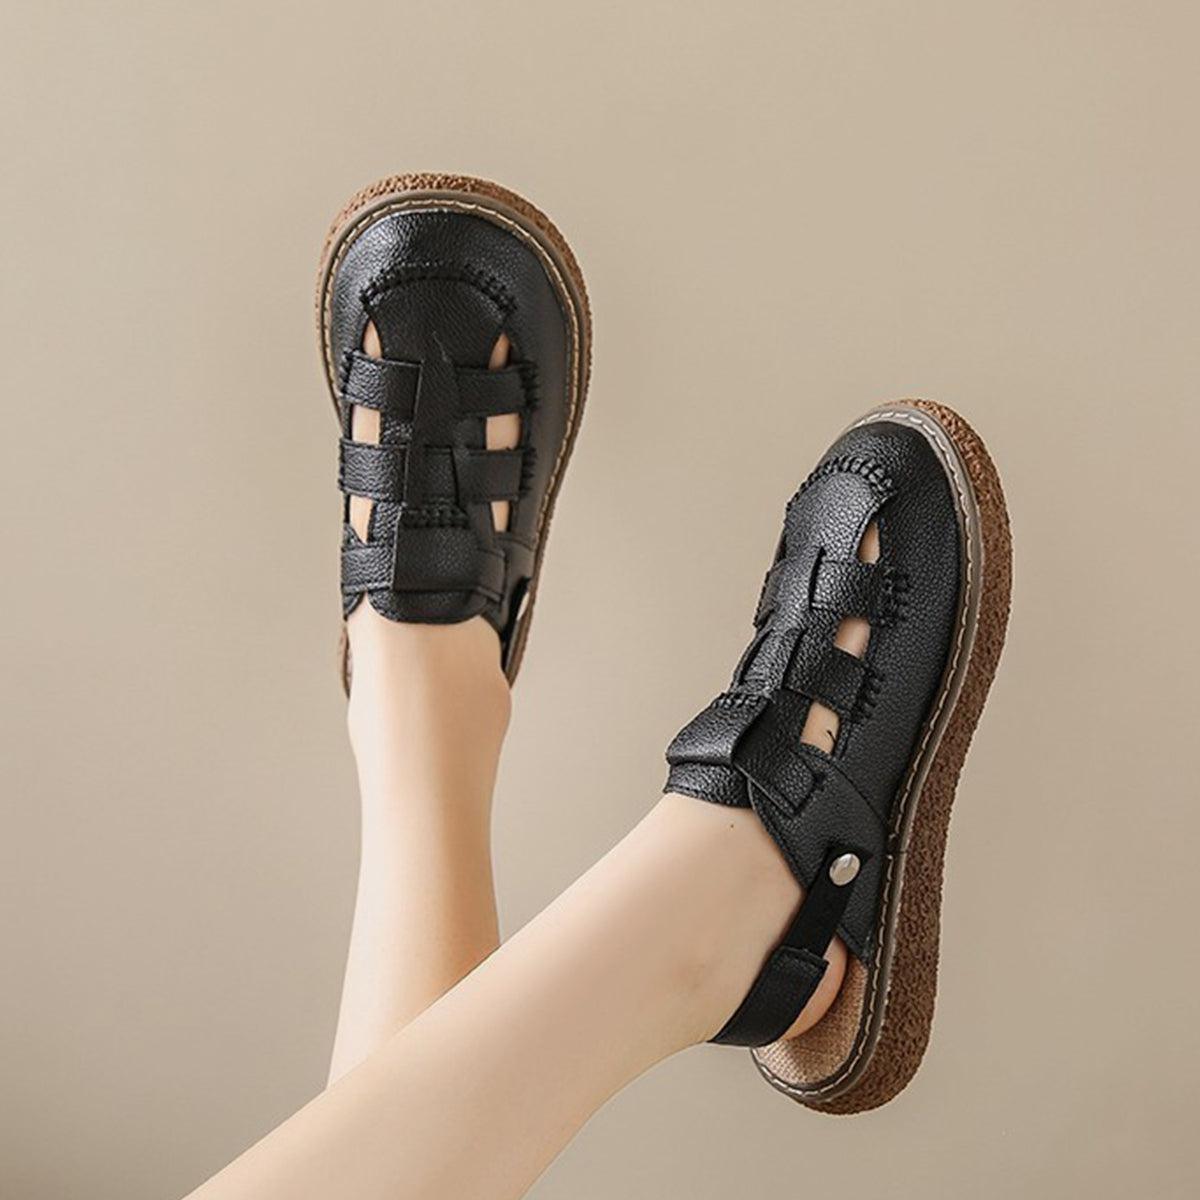 a woman's feet wearing black sandals